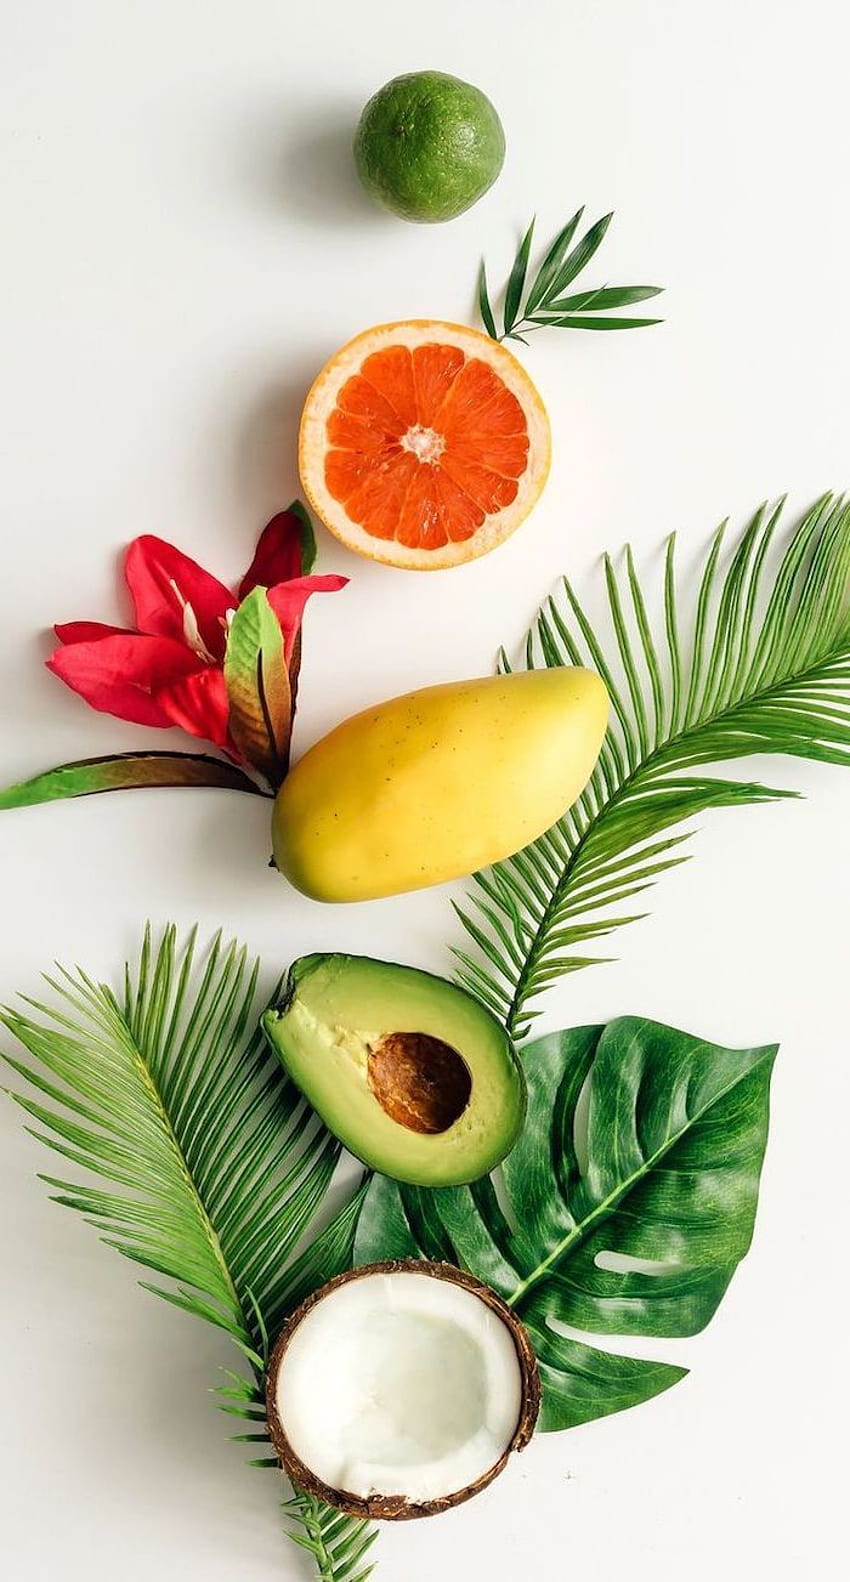 Tropical fruits like mango, orange, coconut, avocado, surrounded by palm leaves - Coconut